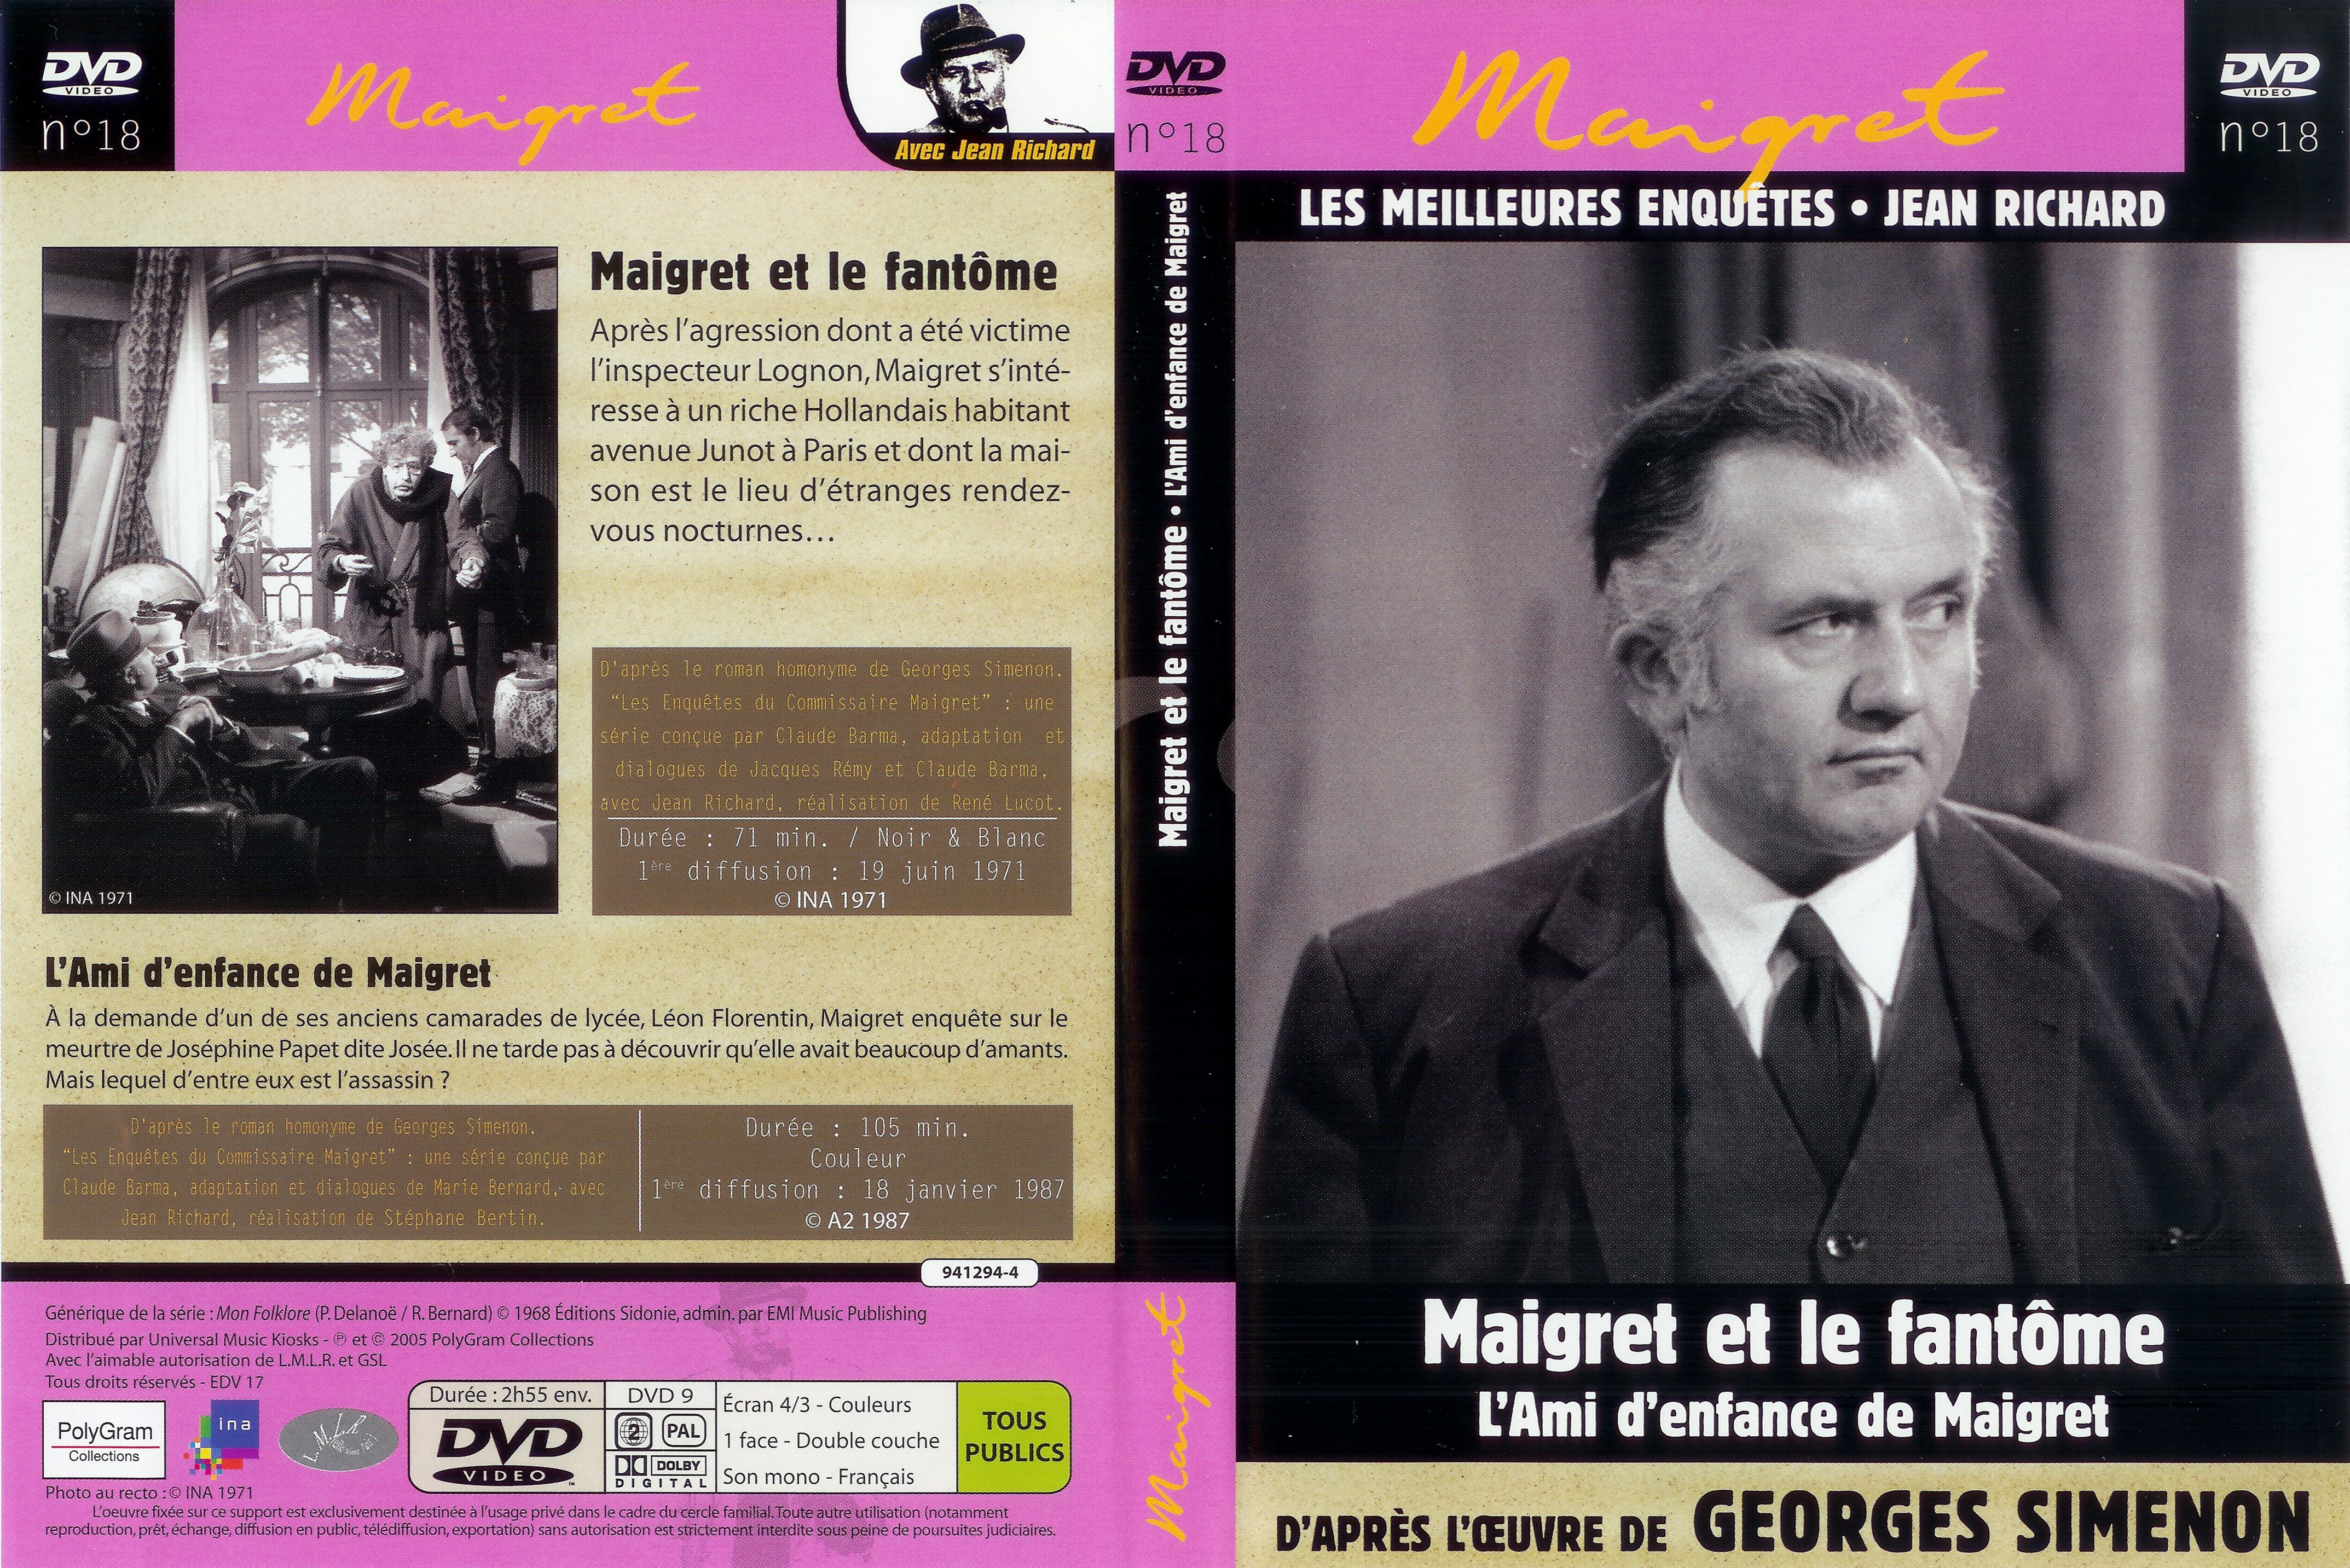 Jaquette DVD Maigret (Jean Richard) vol 18